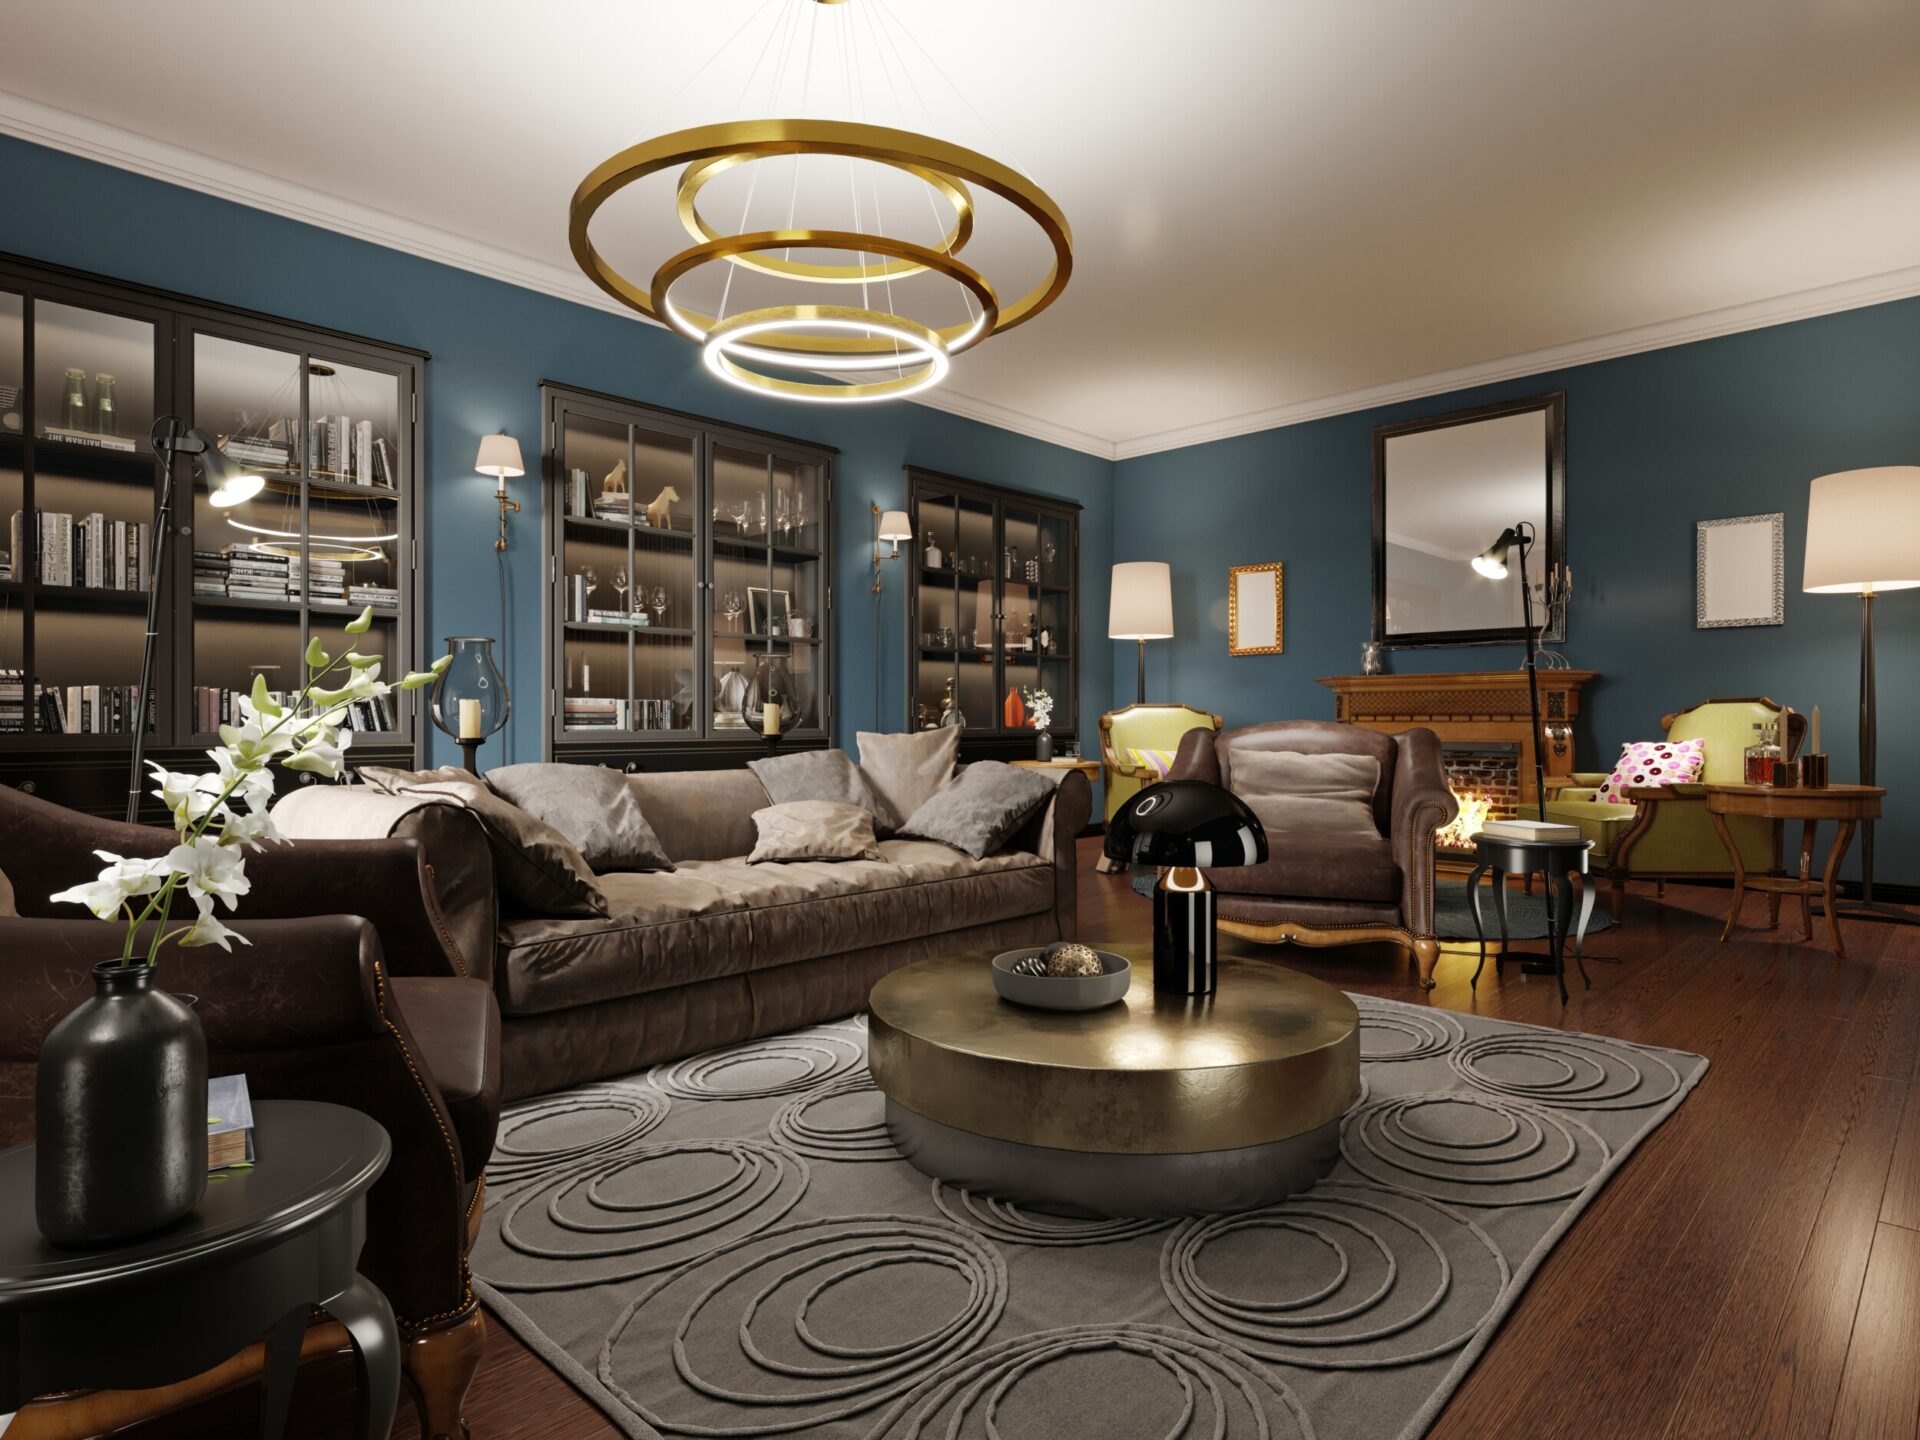 modern eclectic living room in dark colors